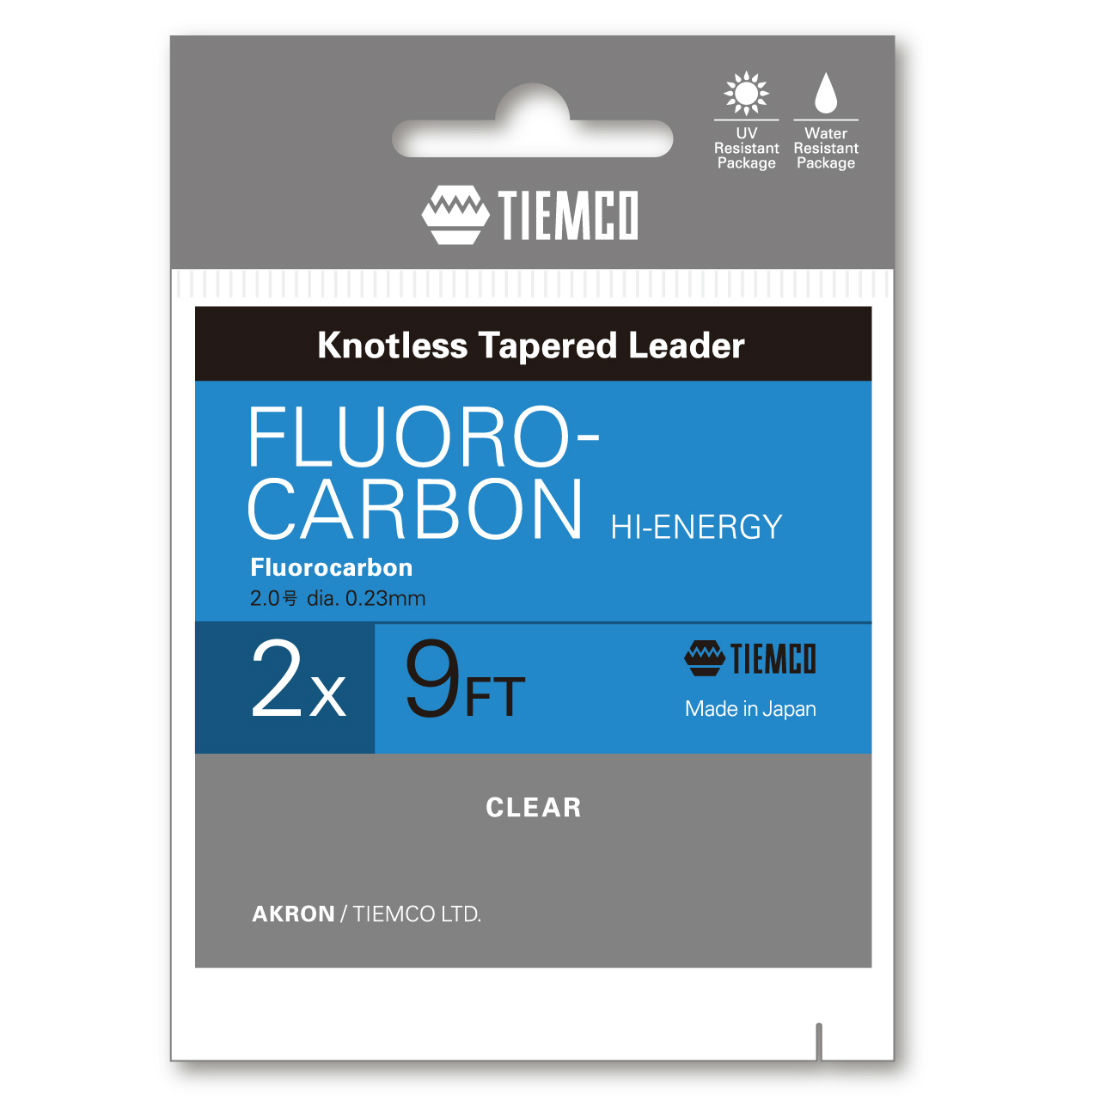 INAINTAS FLY TIEMCO FLUOROCARBON HI-ENERGY LEADER 9ft 3X